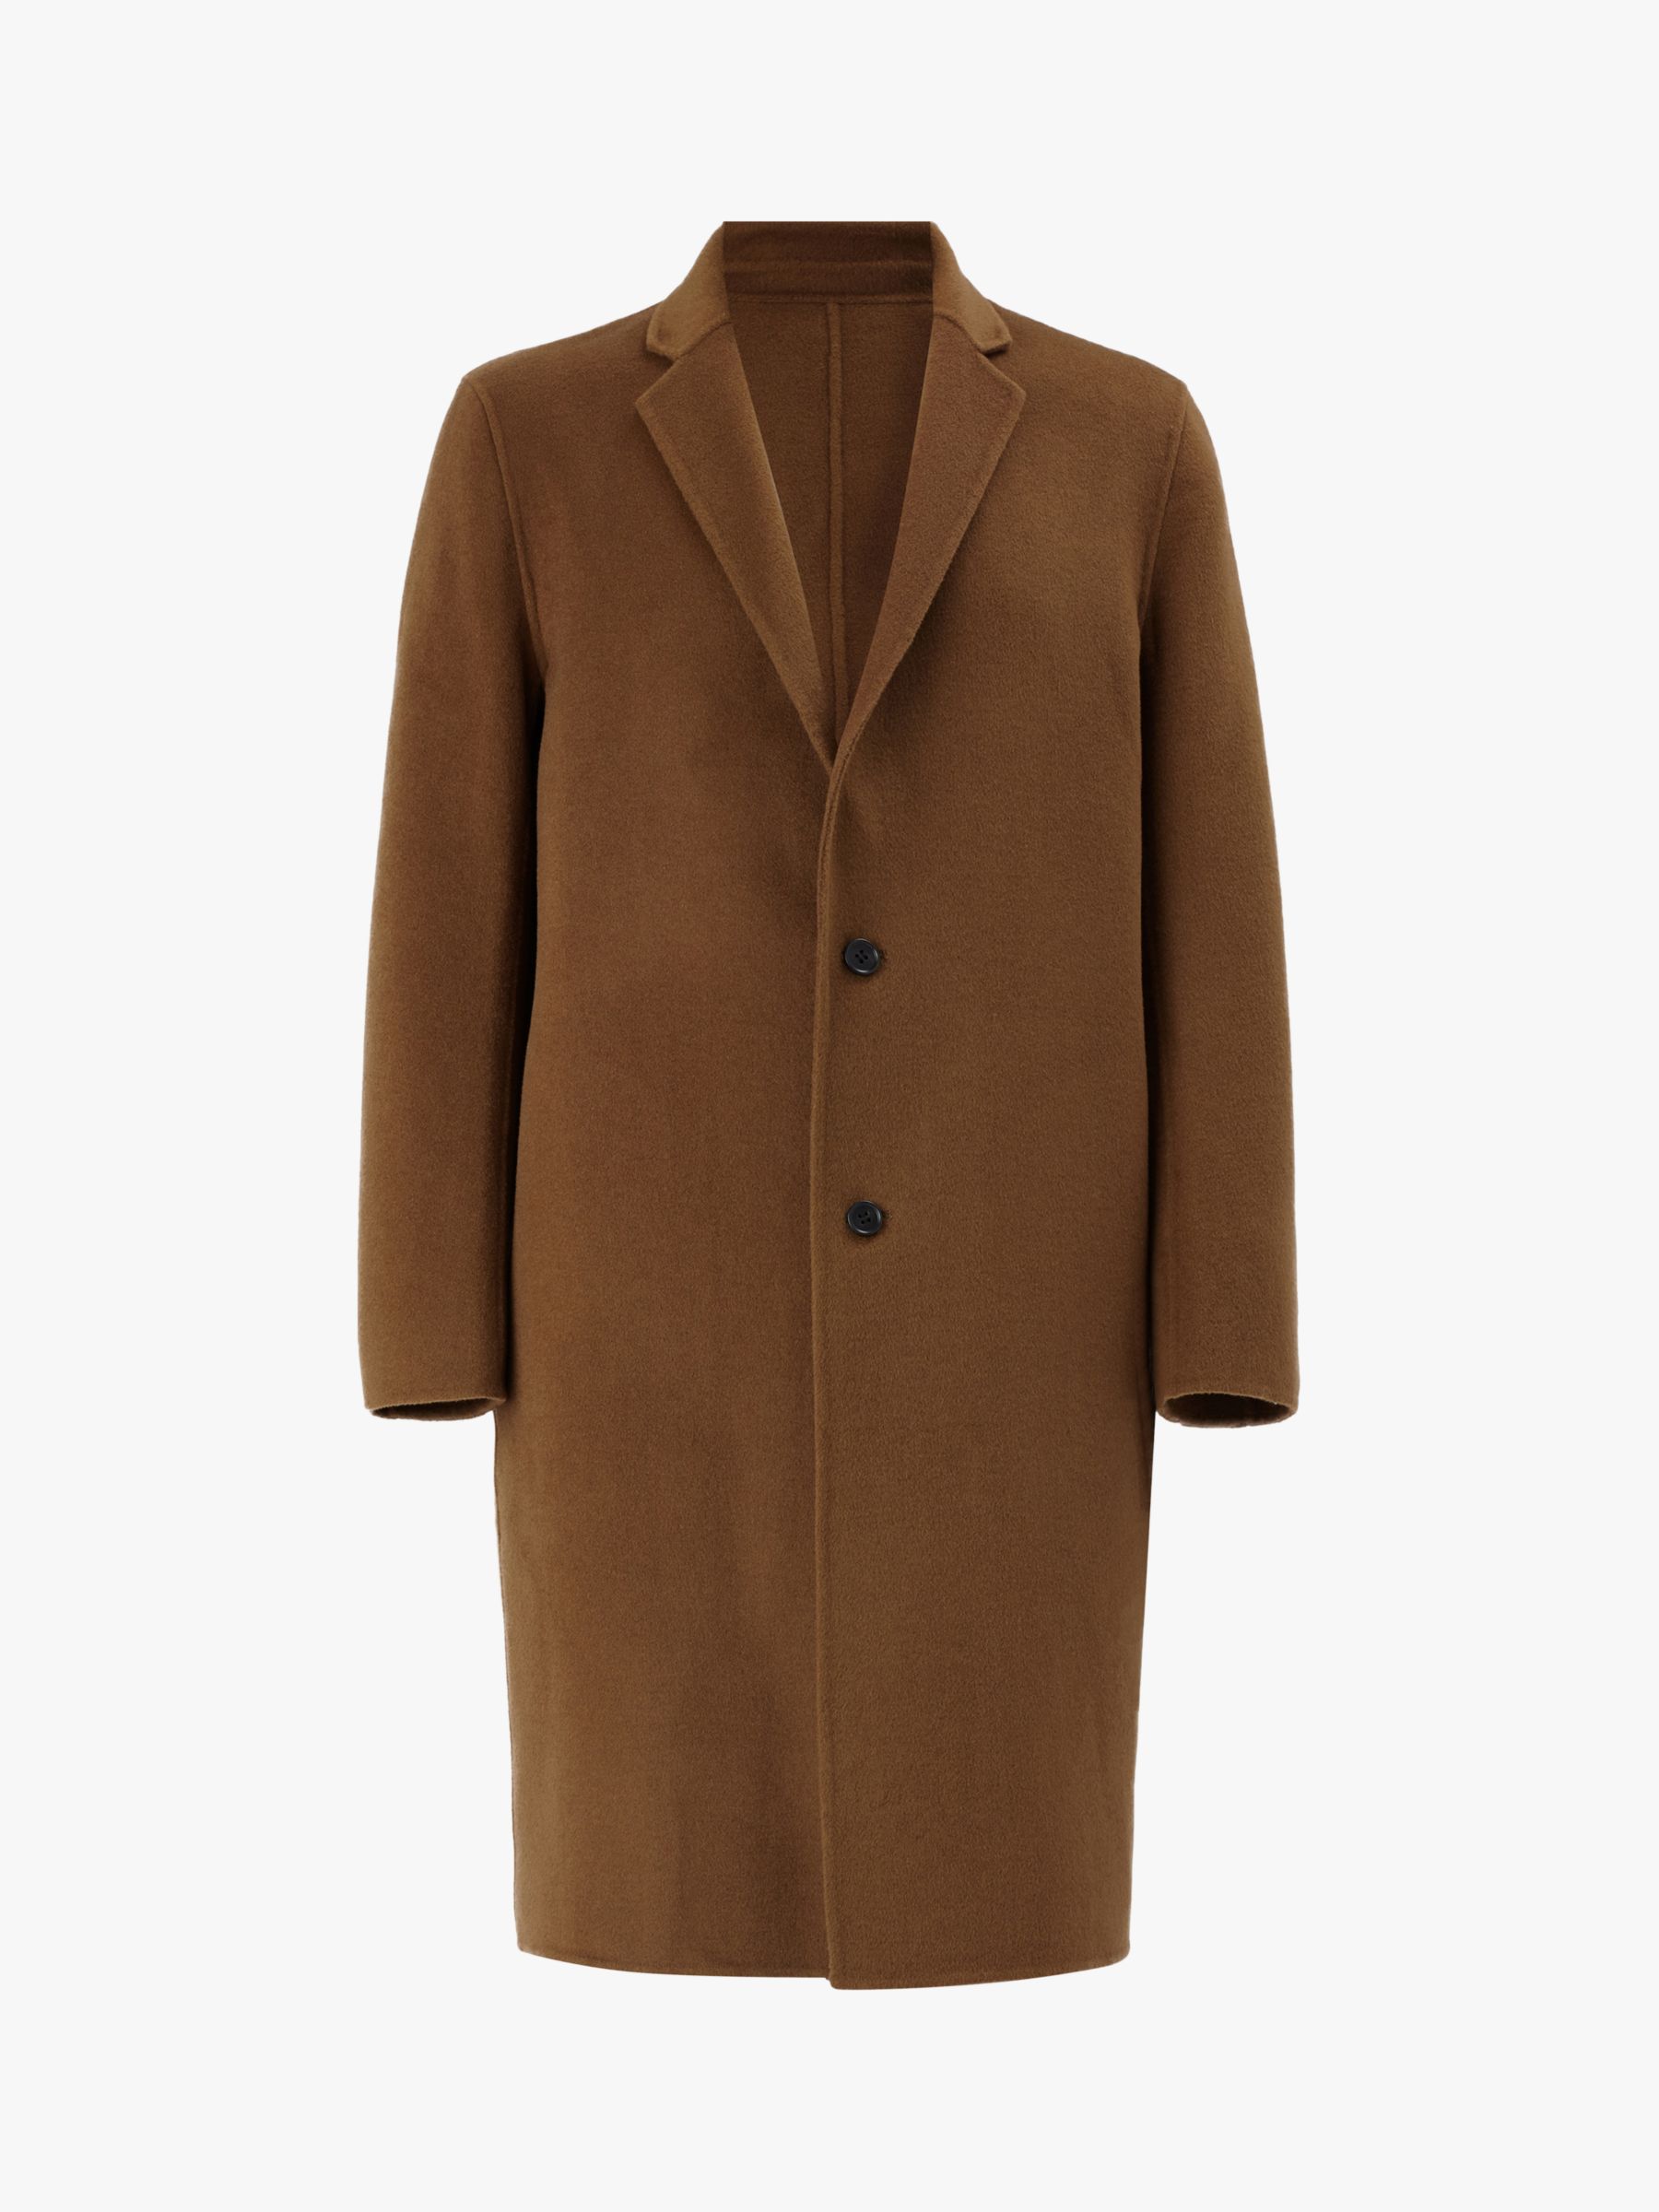 AllSaints Hanson Coat, Ochre Brown